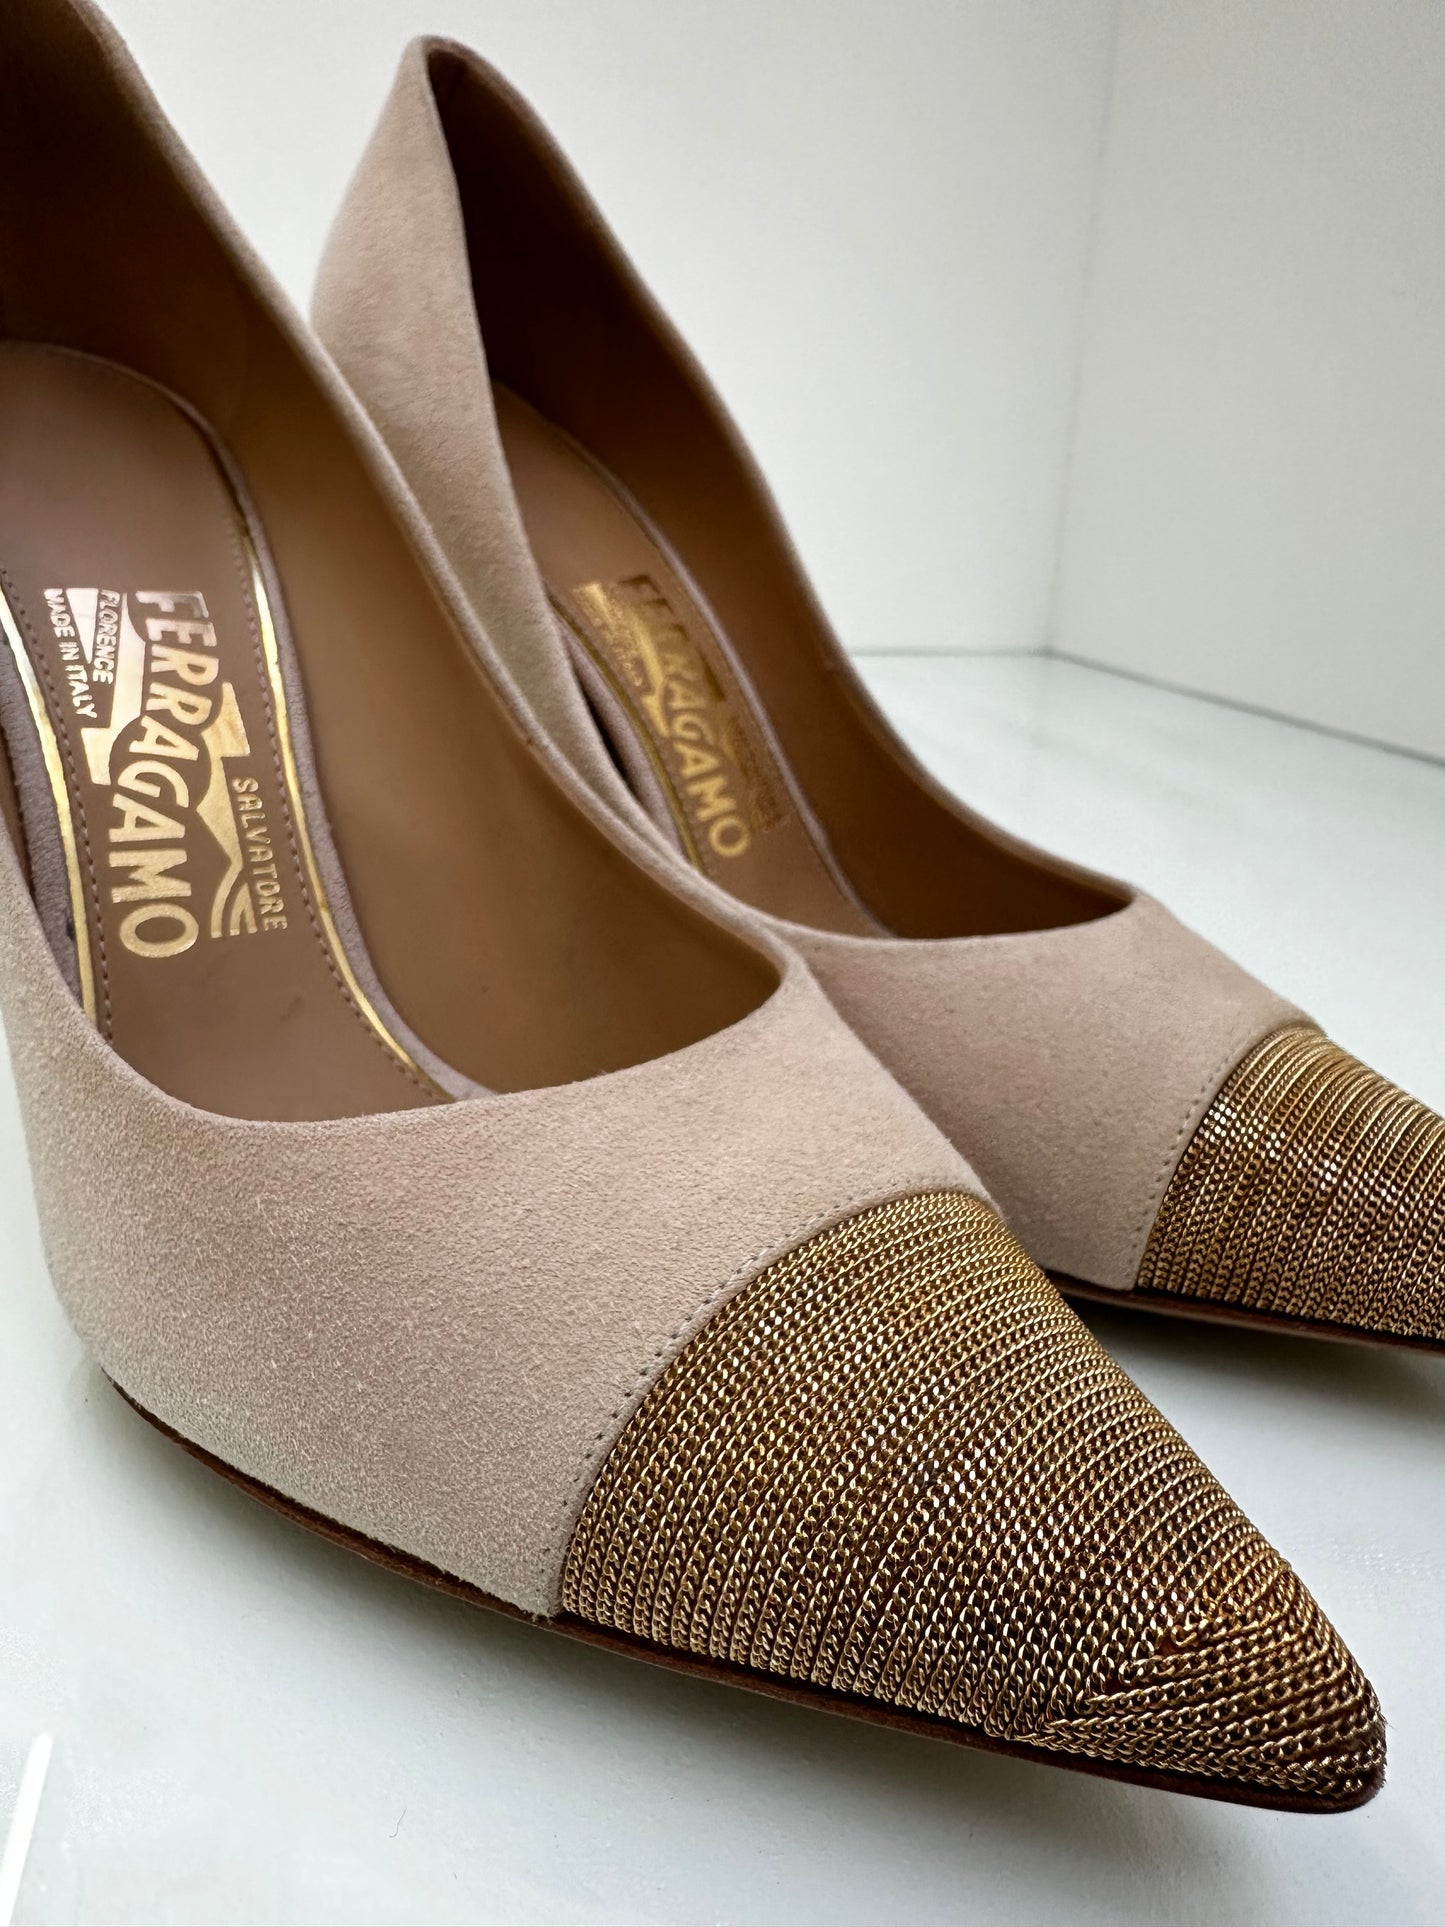 Salvatore Ferragamo Cream Suede & Gold Toe Heels